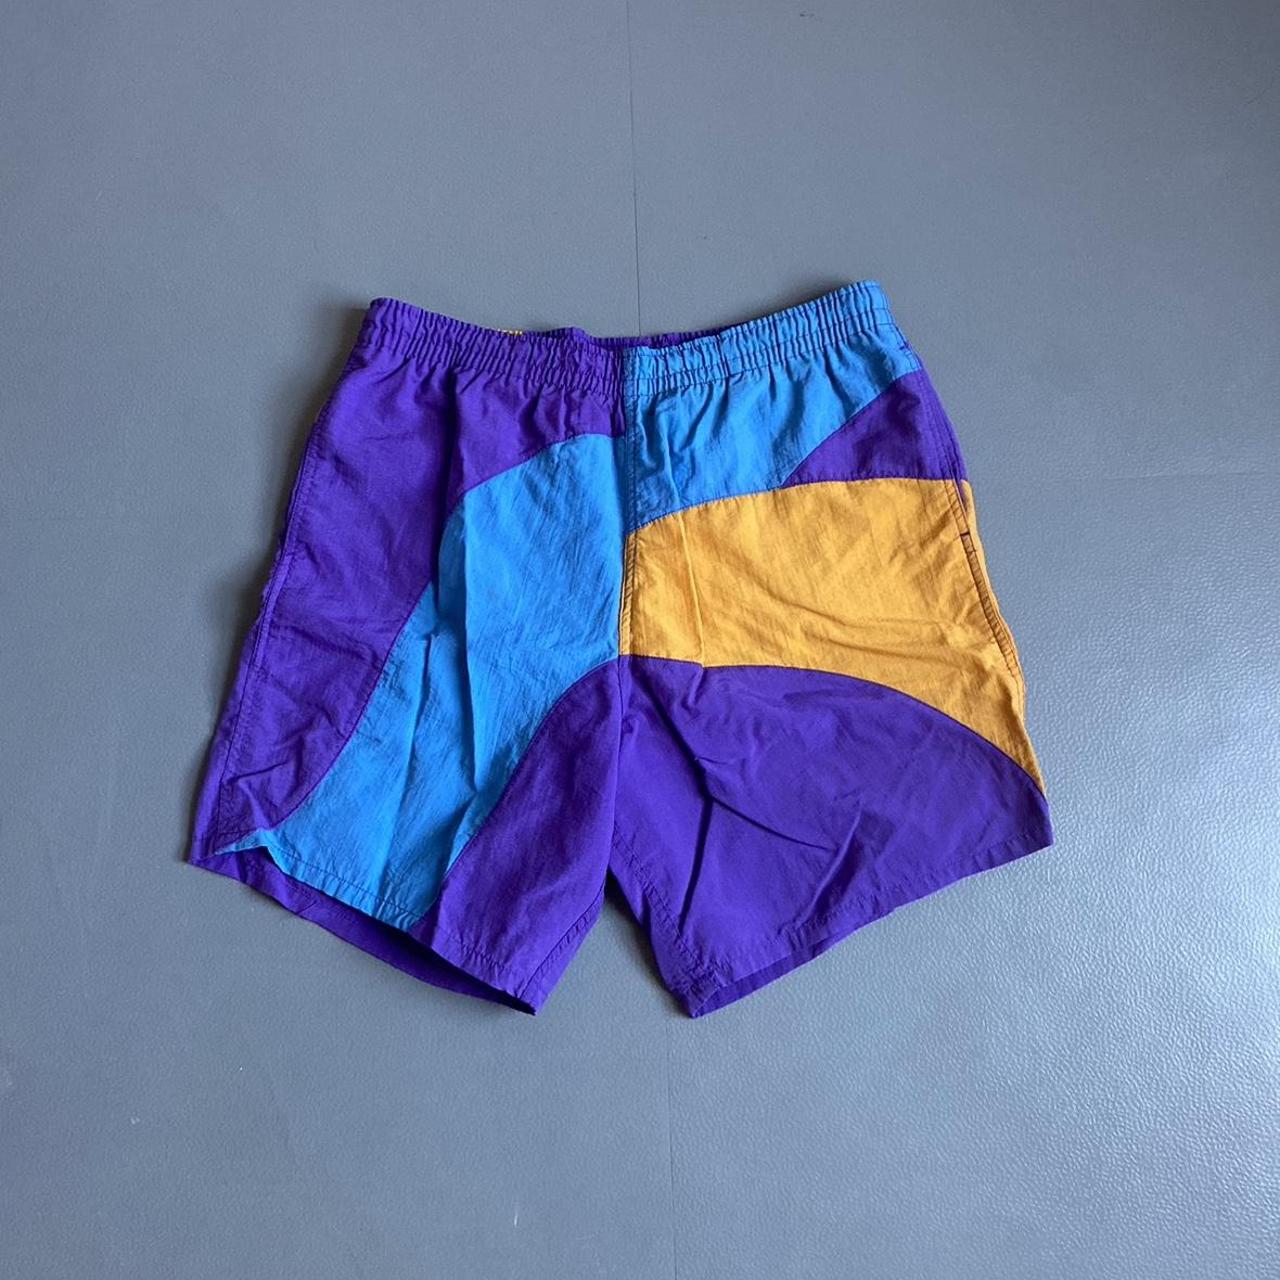 Men's Blue and Purple Shorts | Depop